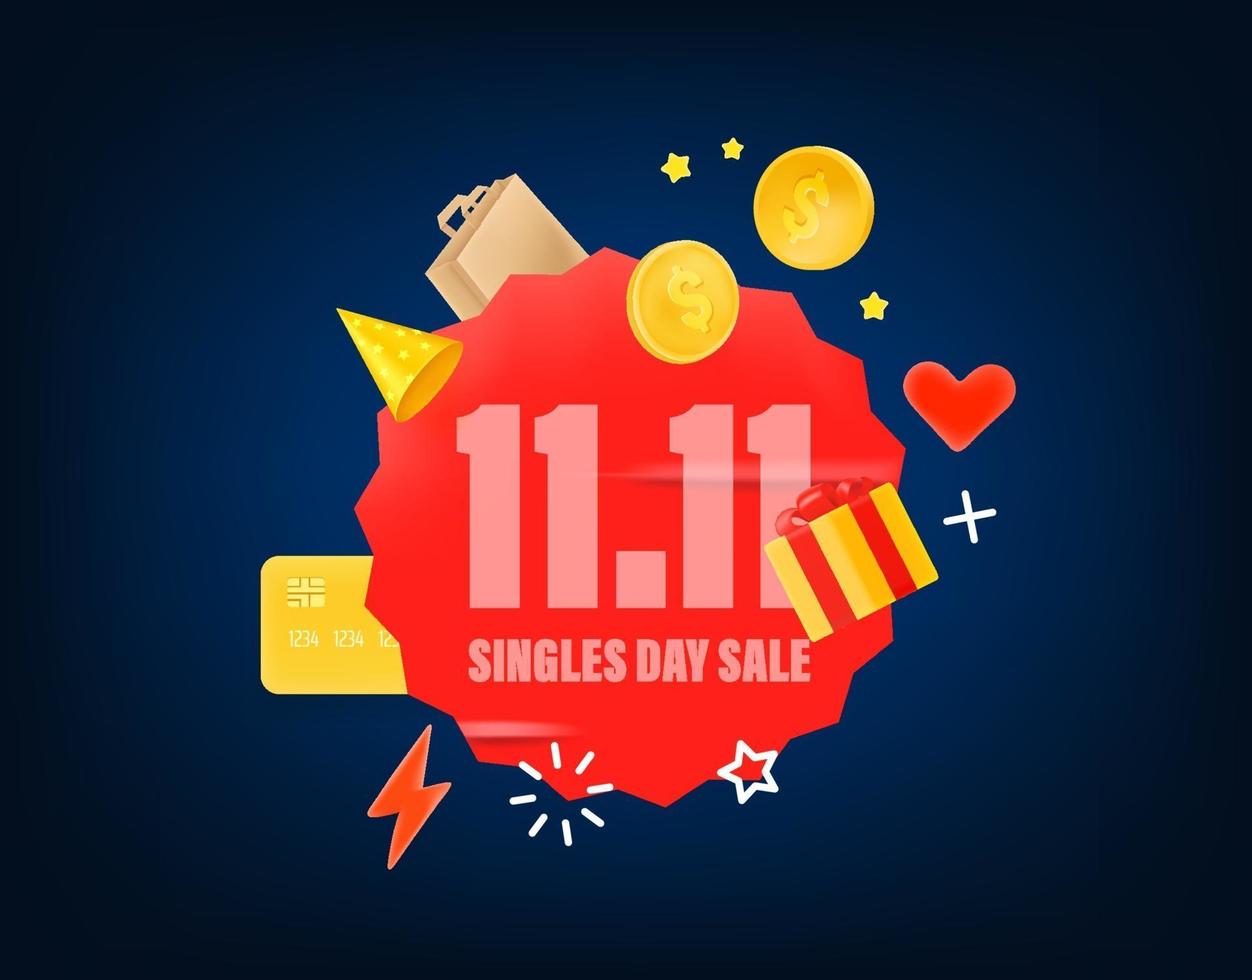 11 november singles day sale banner vector